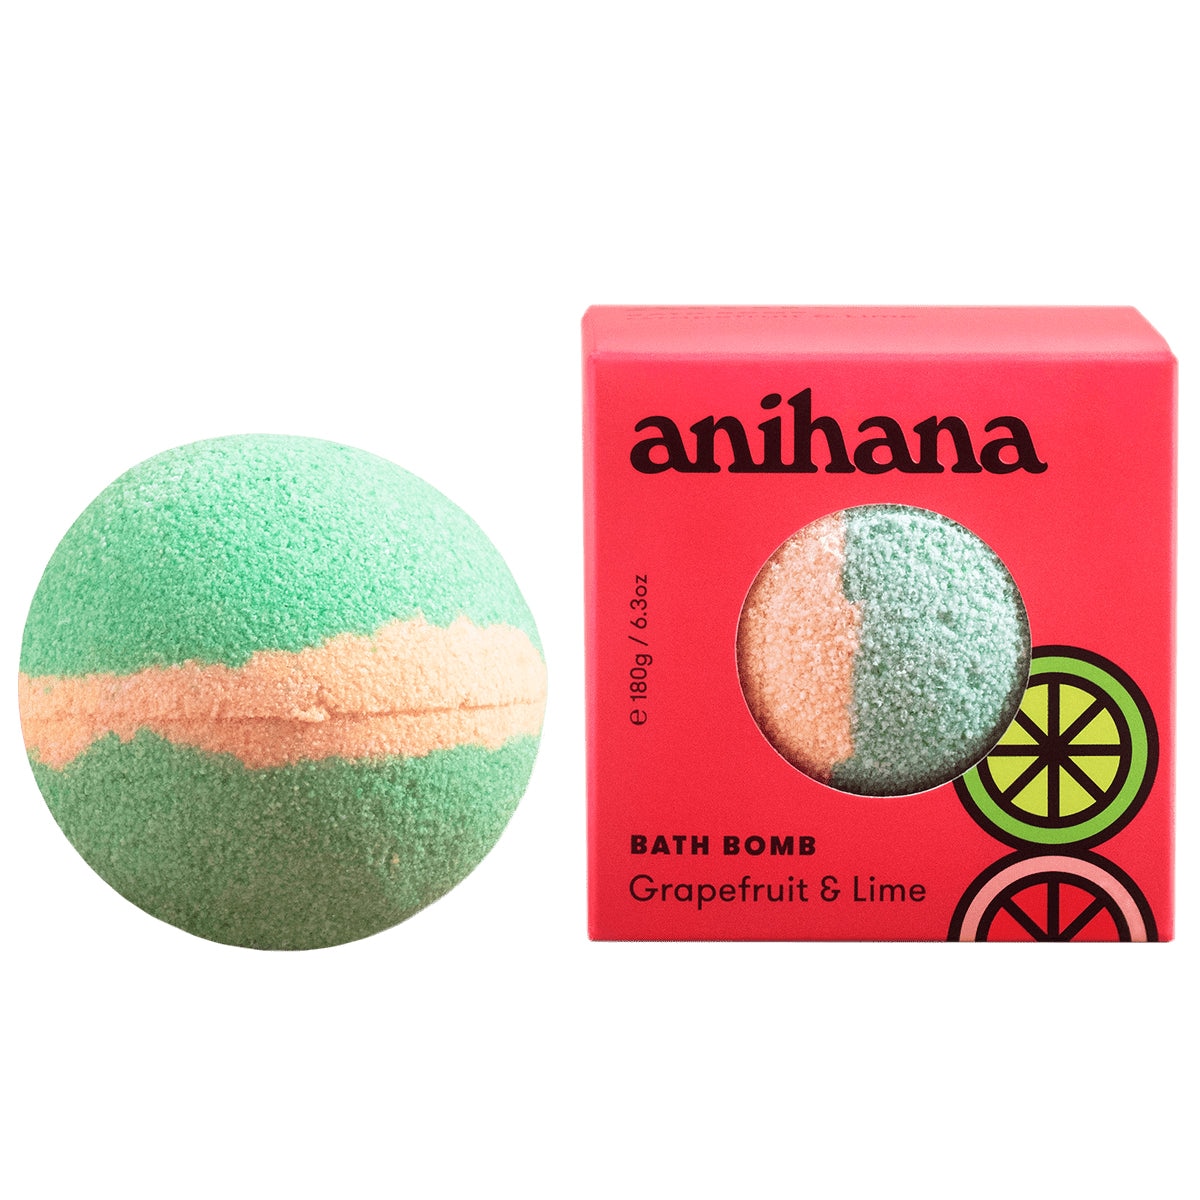 Anihana Bath Bomb Grapefruit & Lime 180g